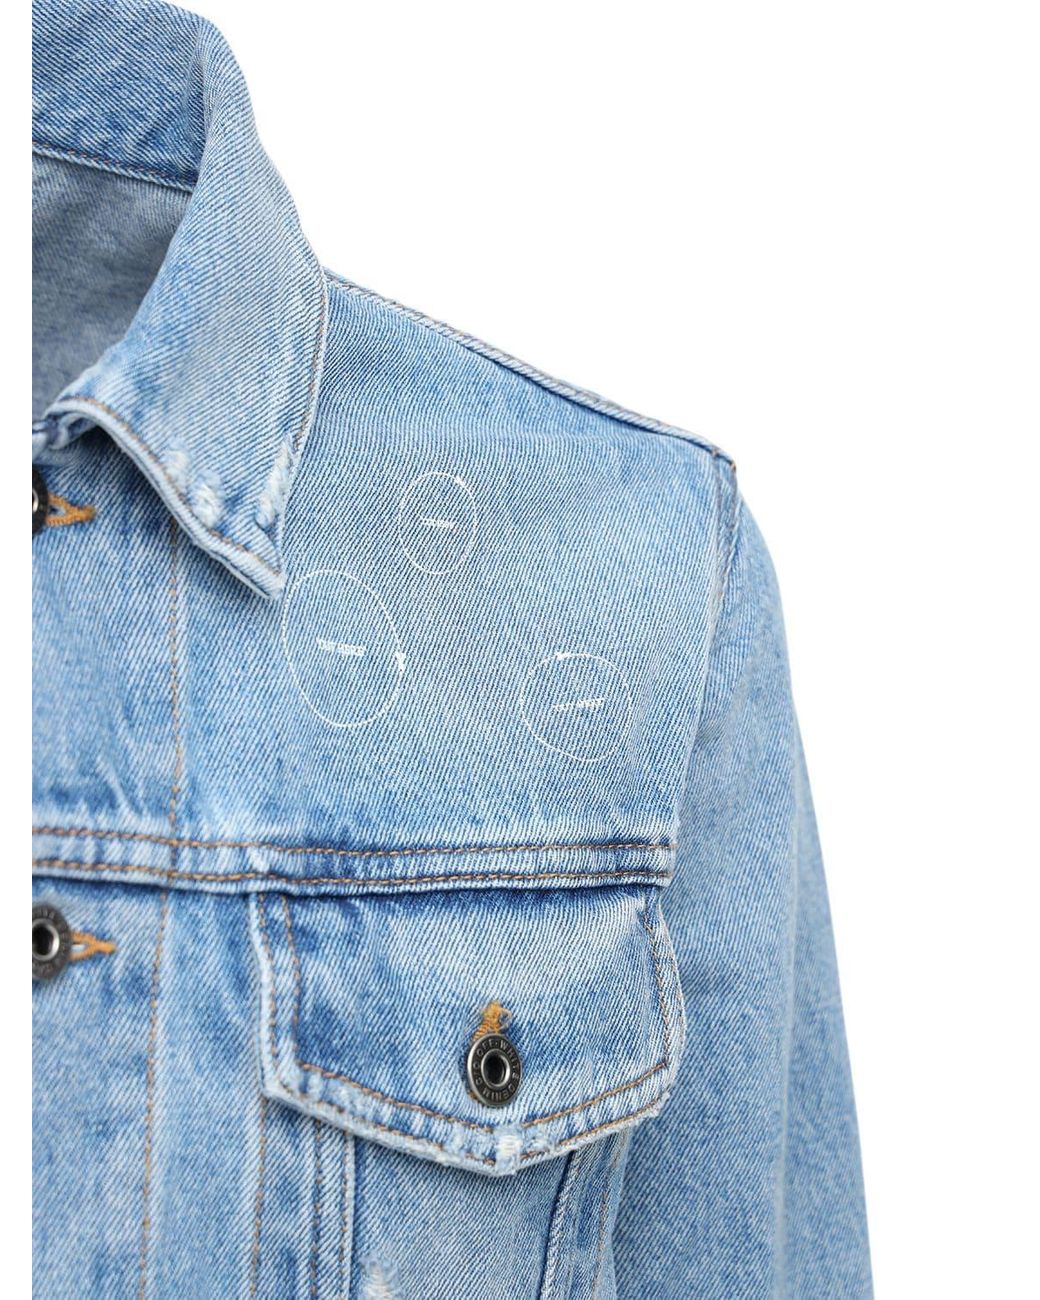 Off-White c/o Virgil Abloh Arrow Twist Cotton Denim Jacket in Blue/White  (Blue) for Men | Lyst Canada